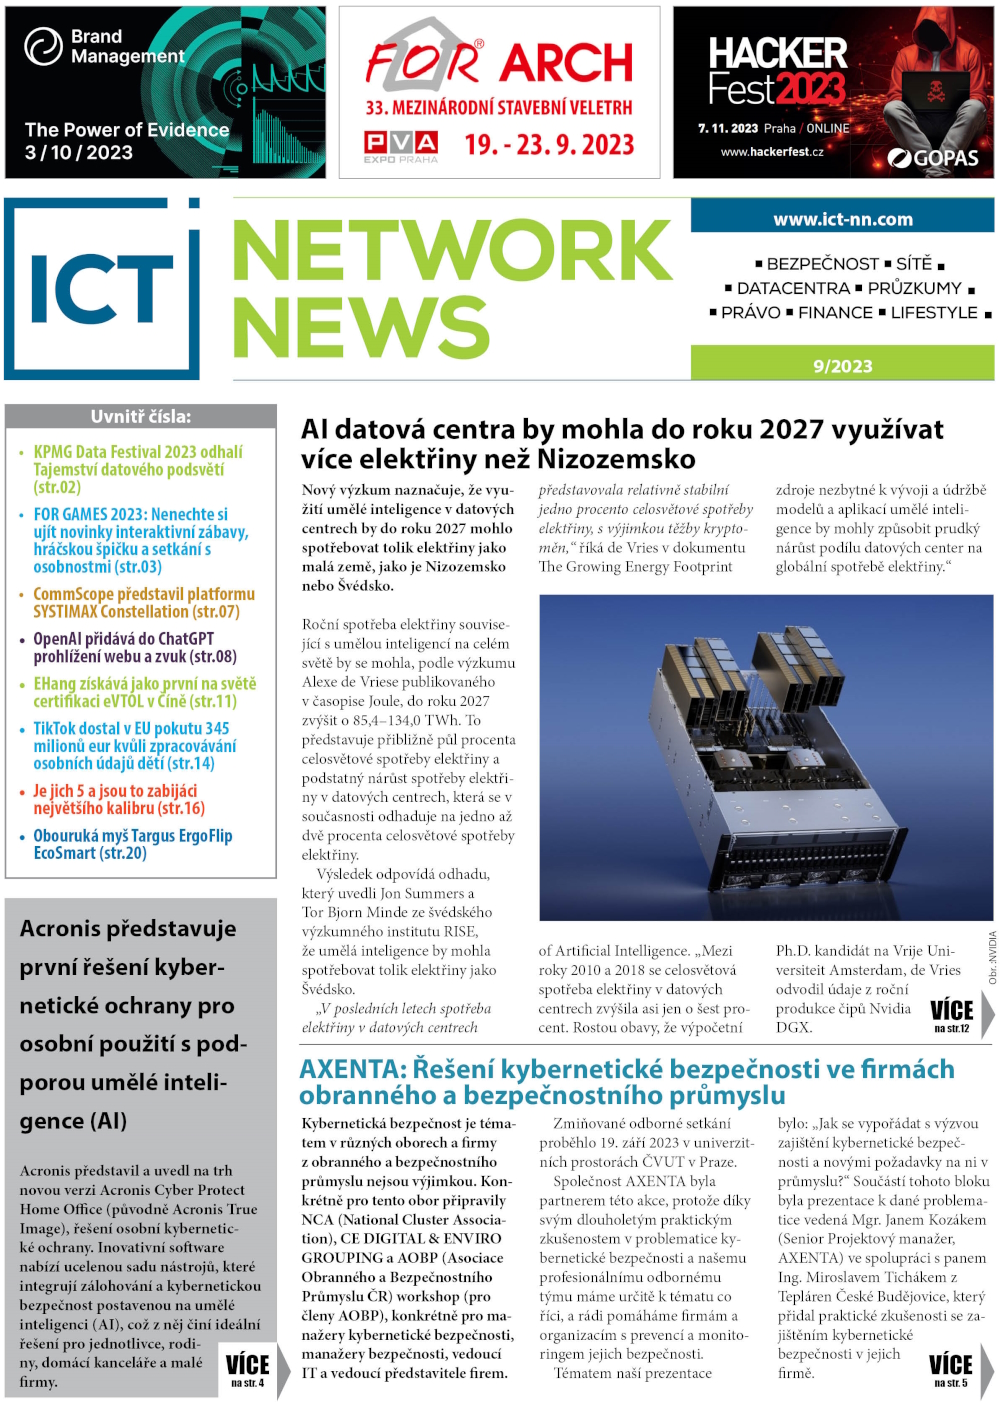 ICT NETWORK NEWS 9-2023